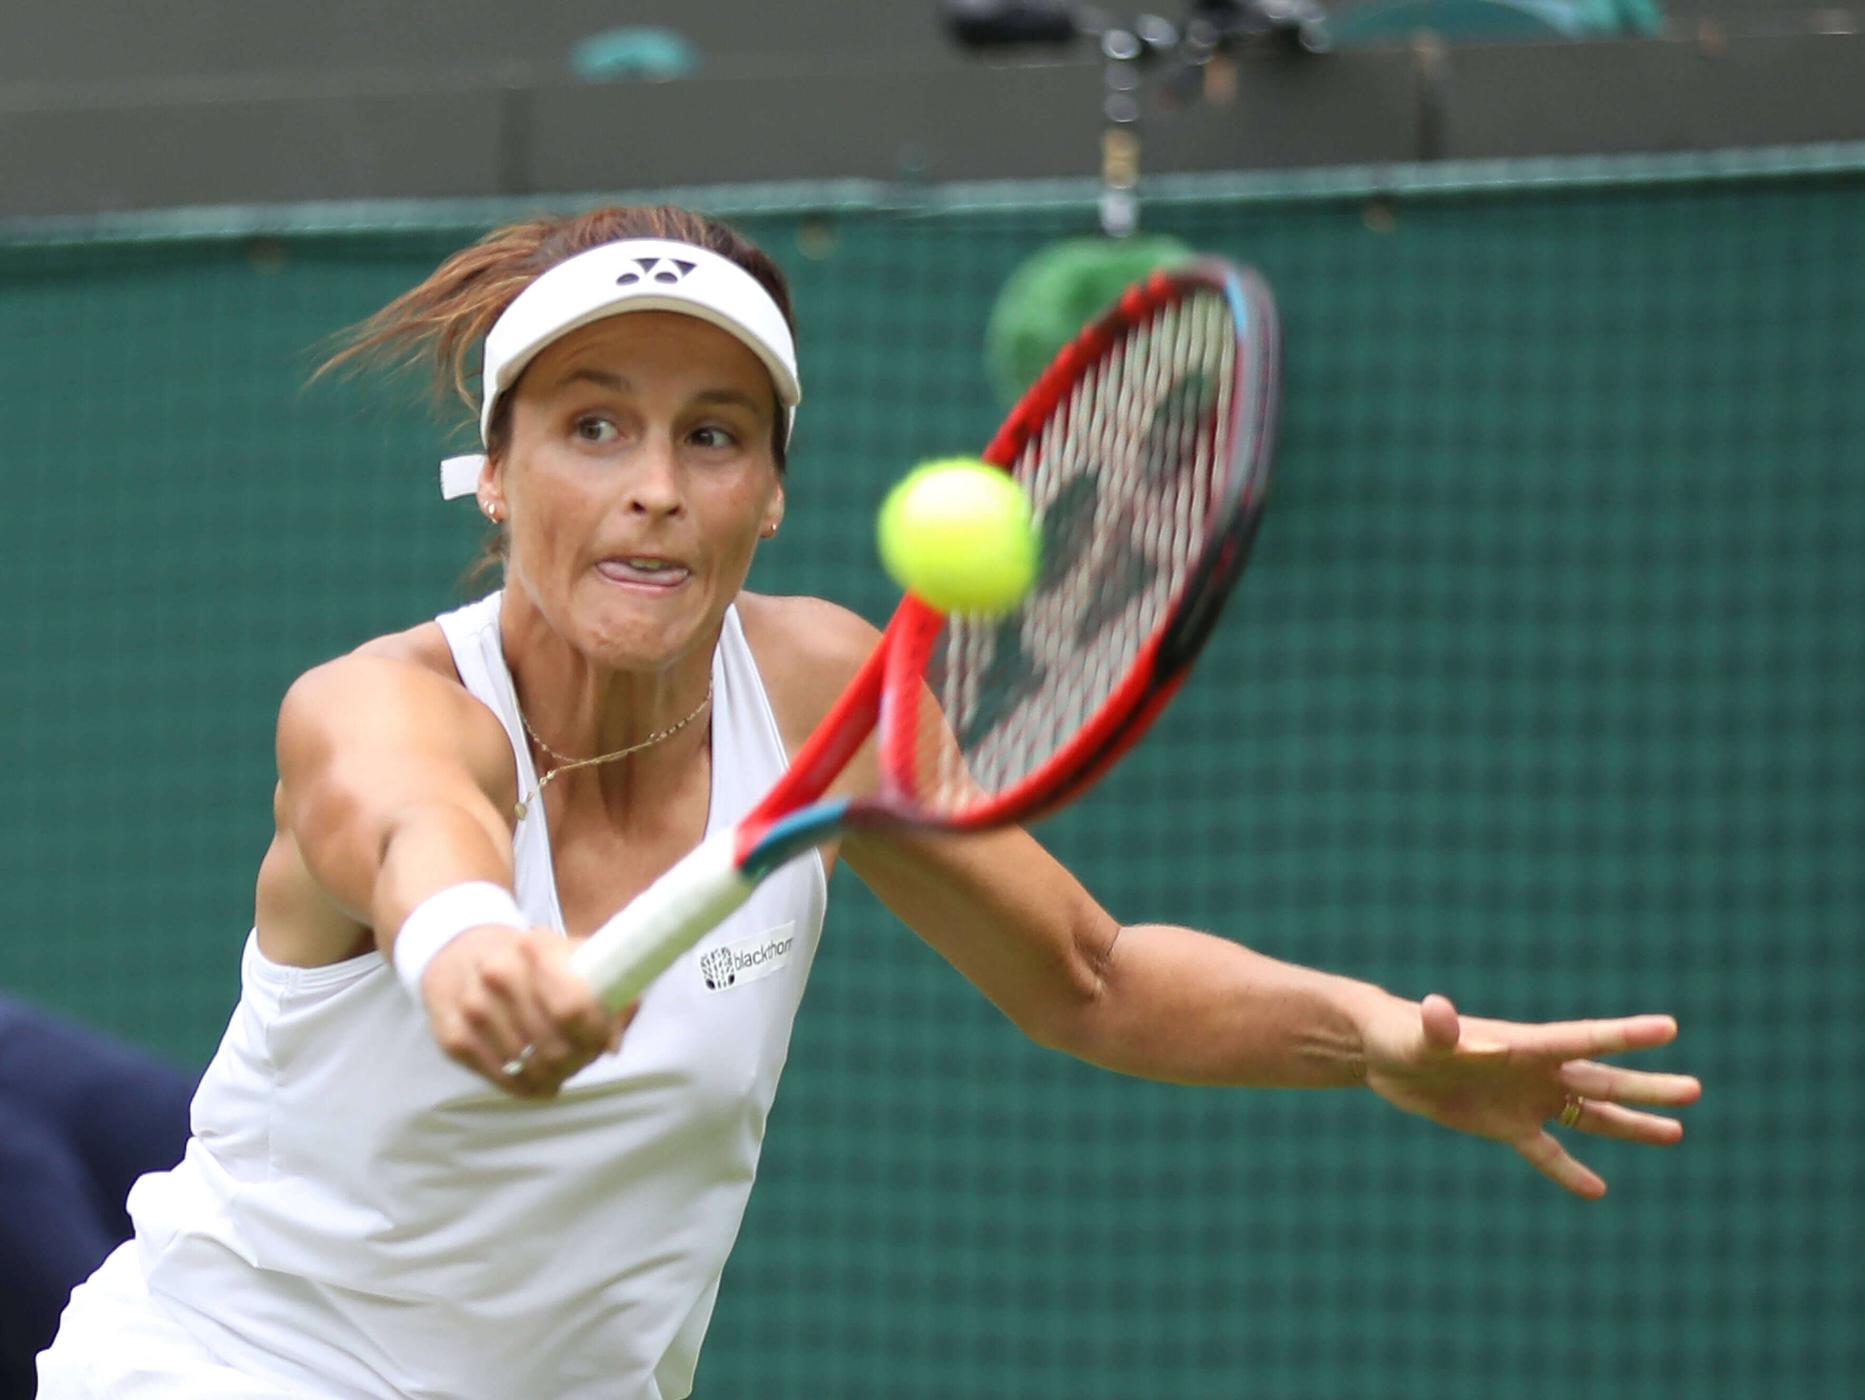 Wimbledon-Finaltraum geplatzt! Tatjana Maria geht die Luft gegen Ons Jabeur aus Sports Illustrated